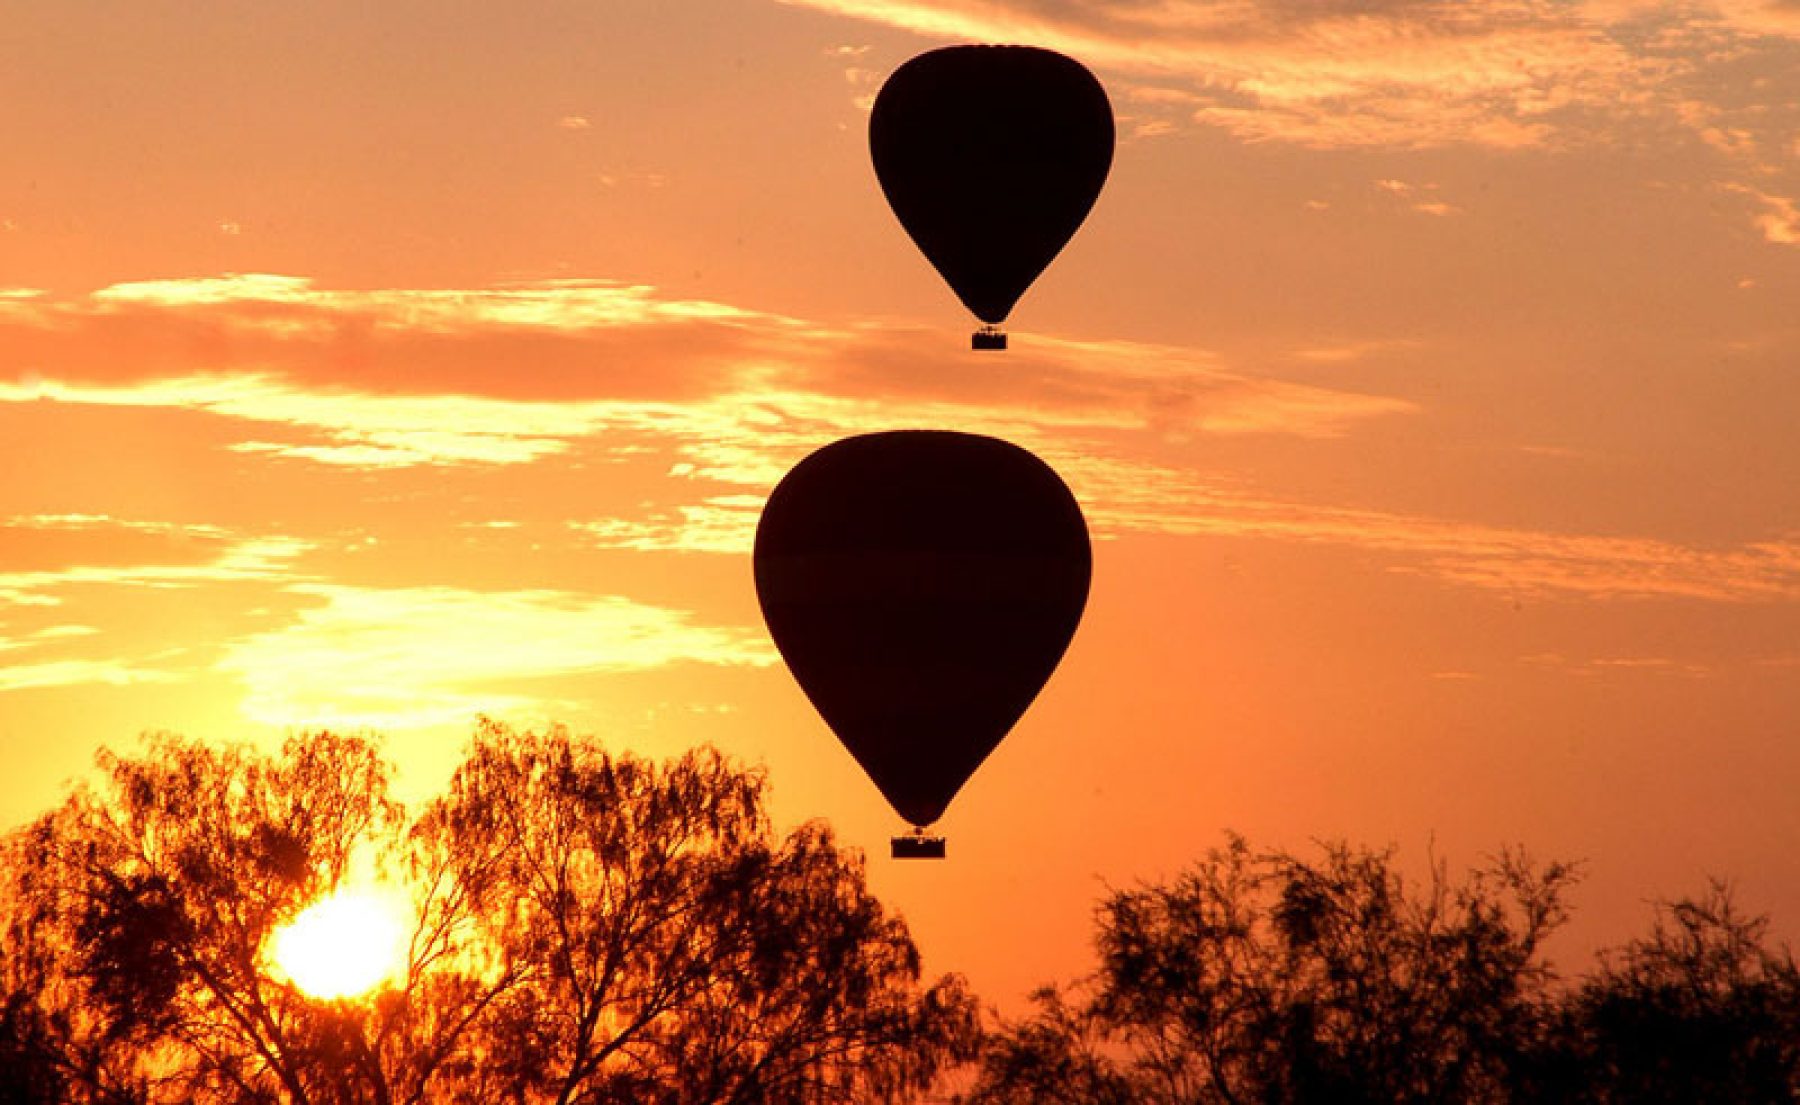 australia alice springs ballooning2